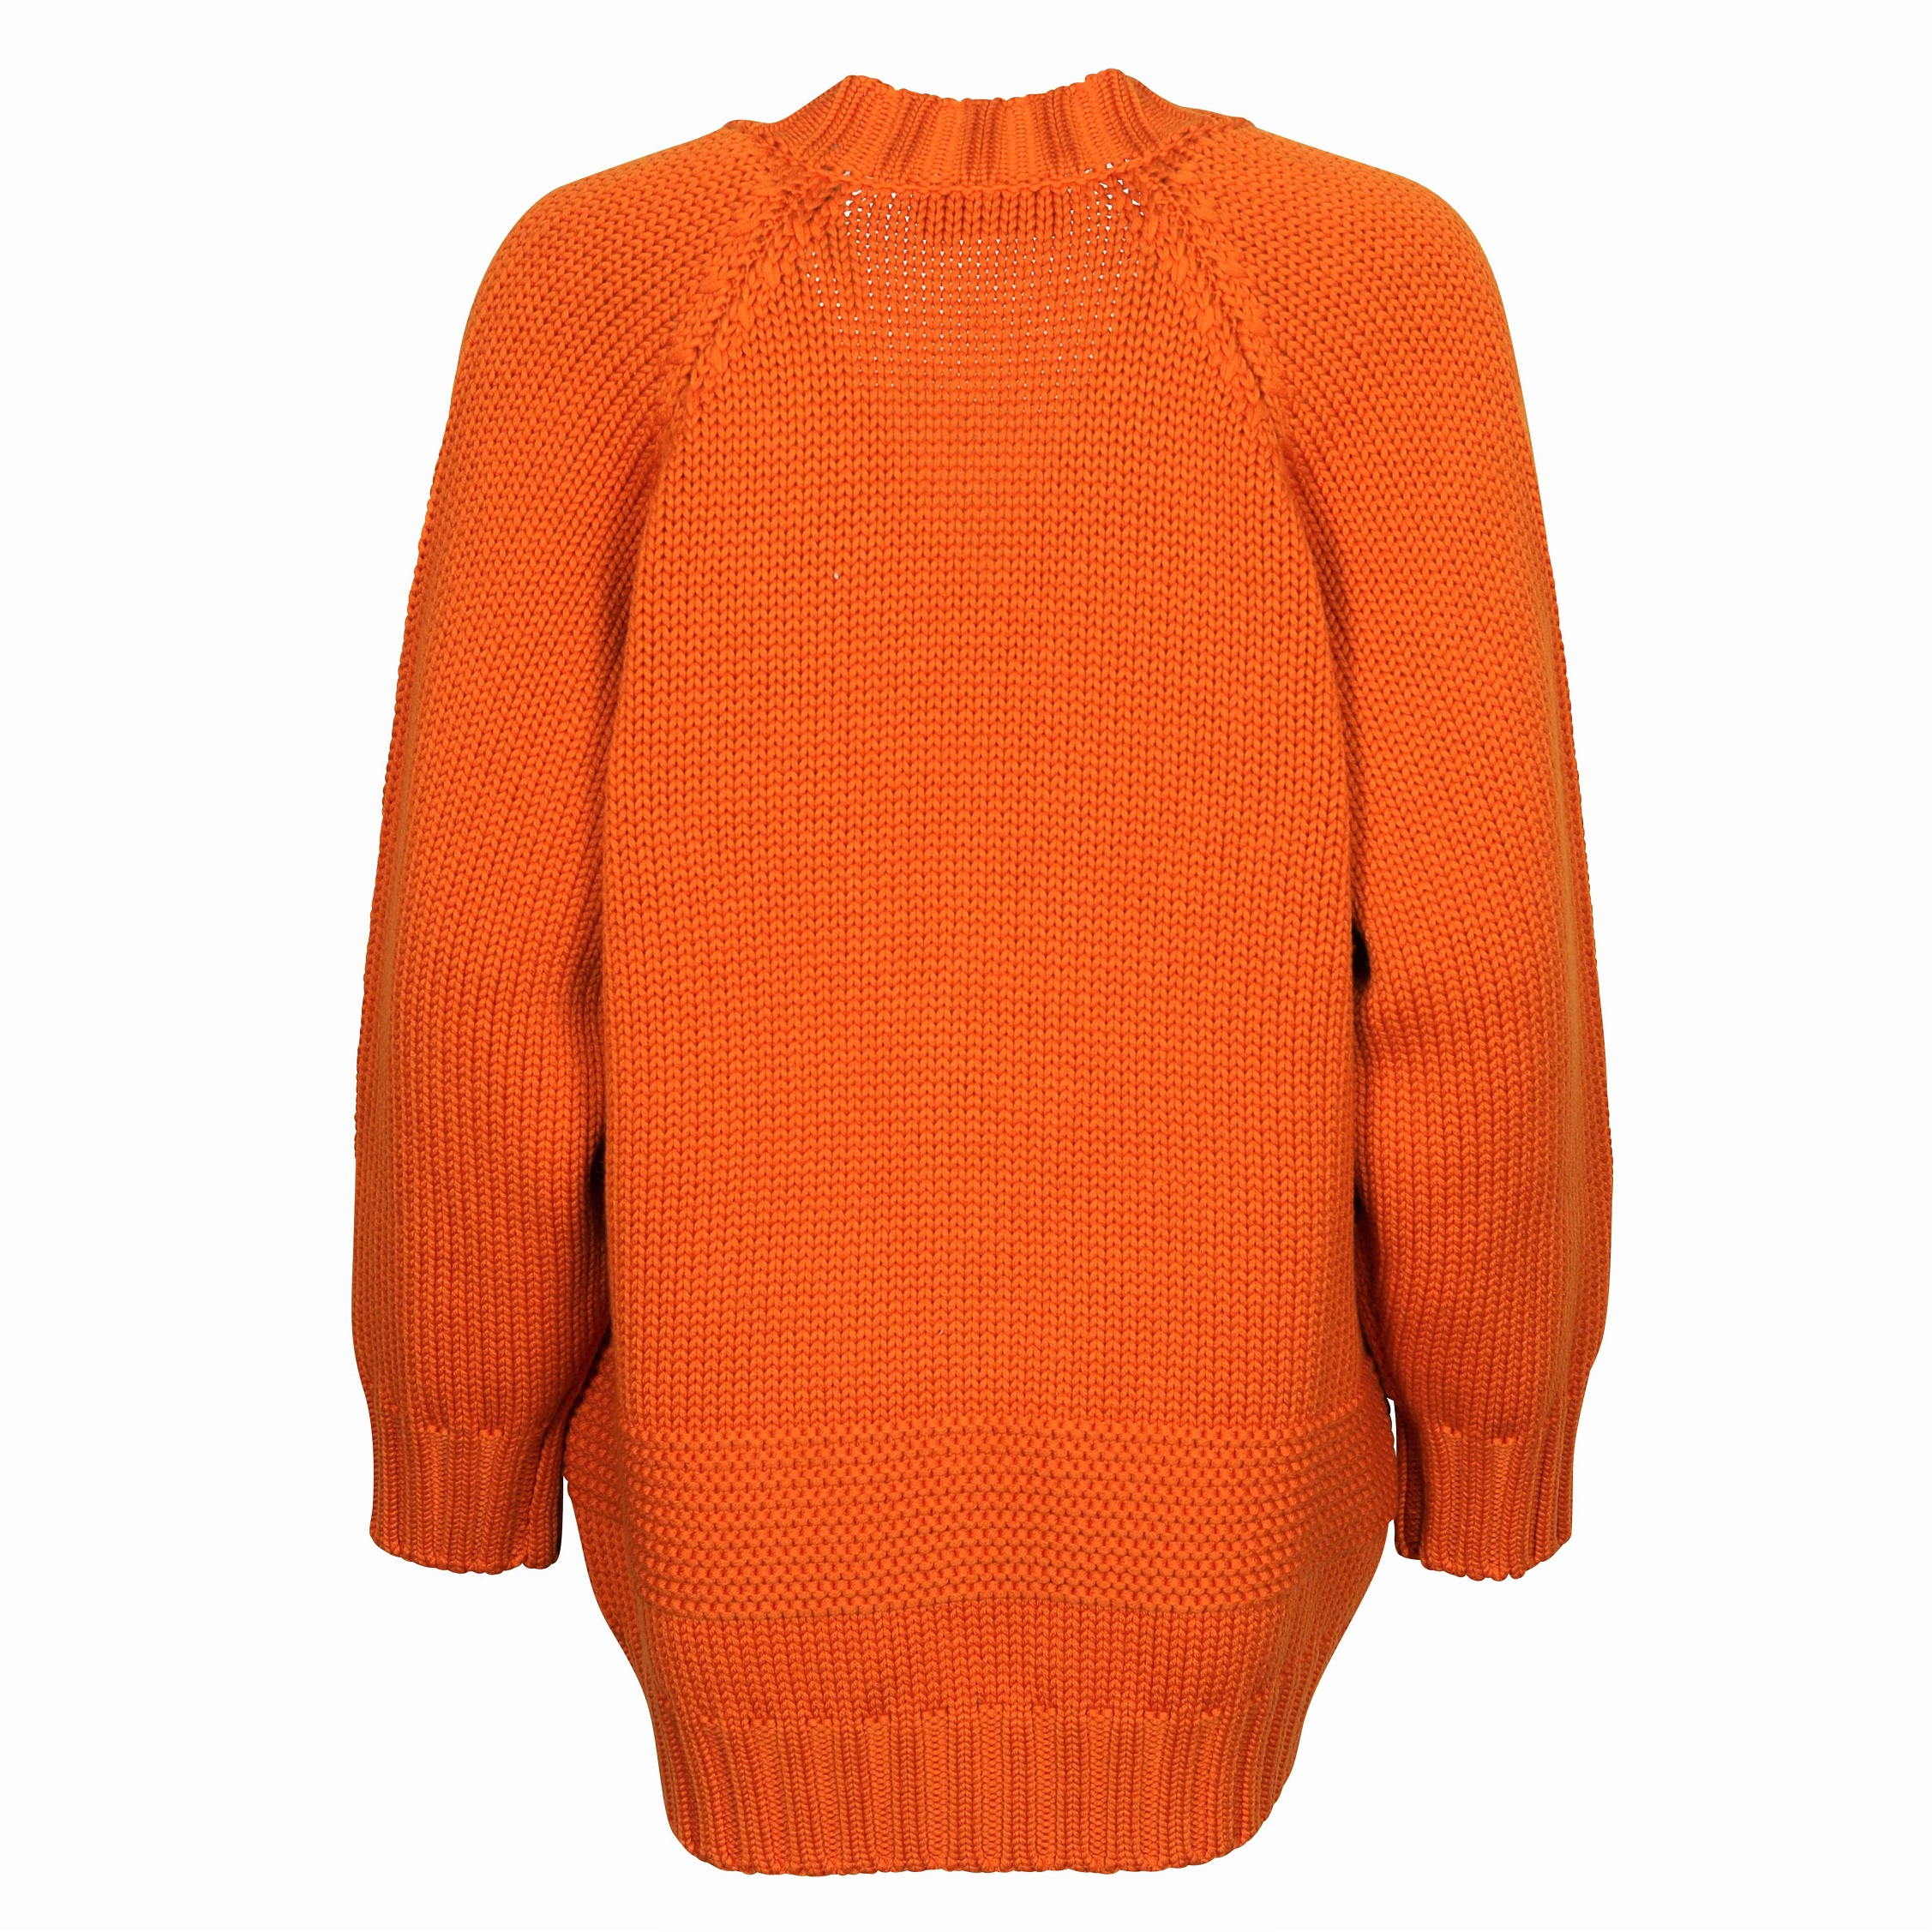 Dsquared2 Knit Cardigan in Vintage Orange